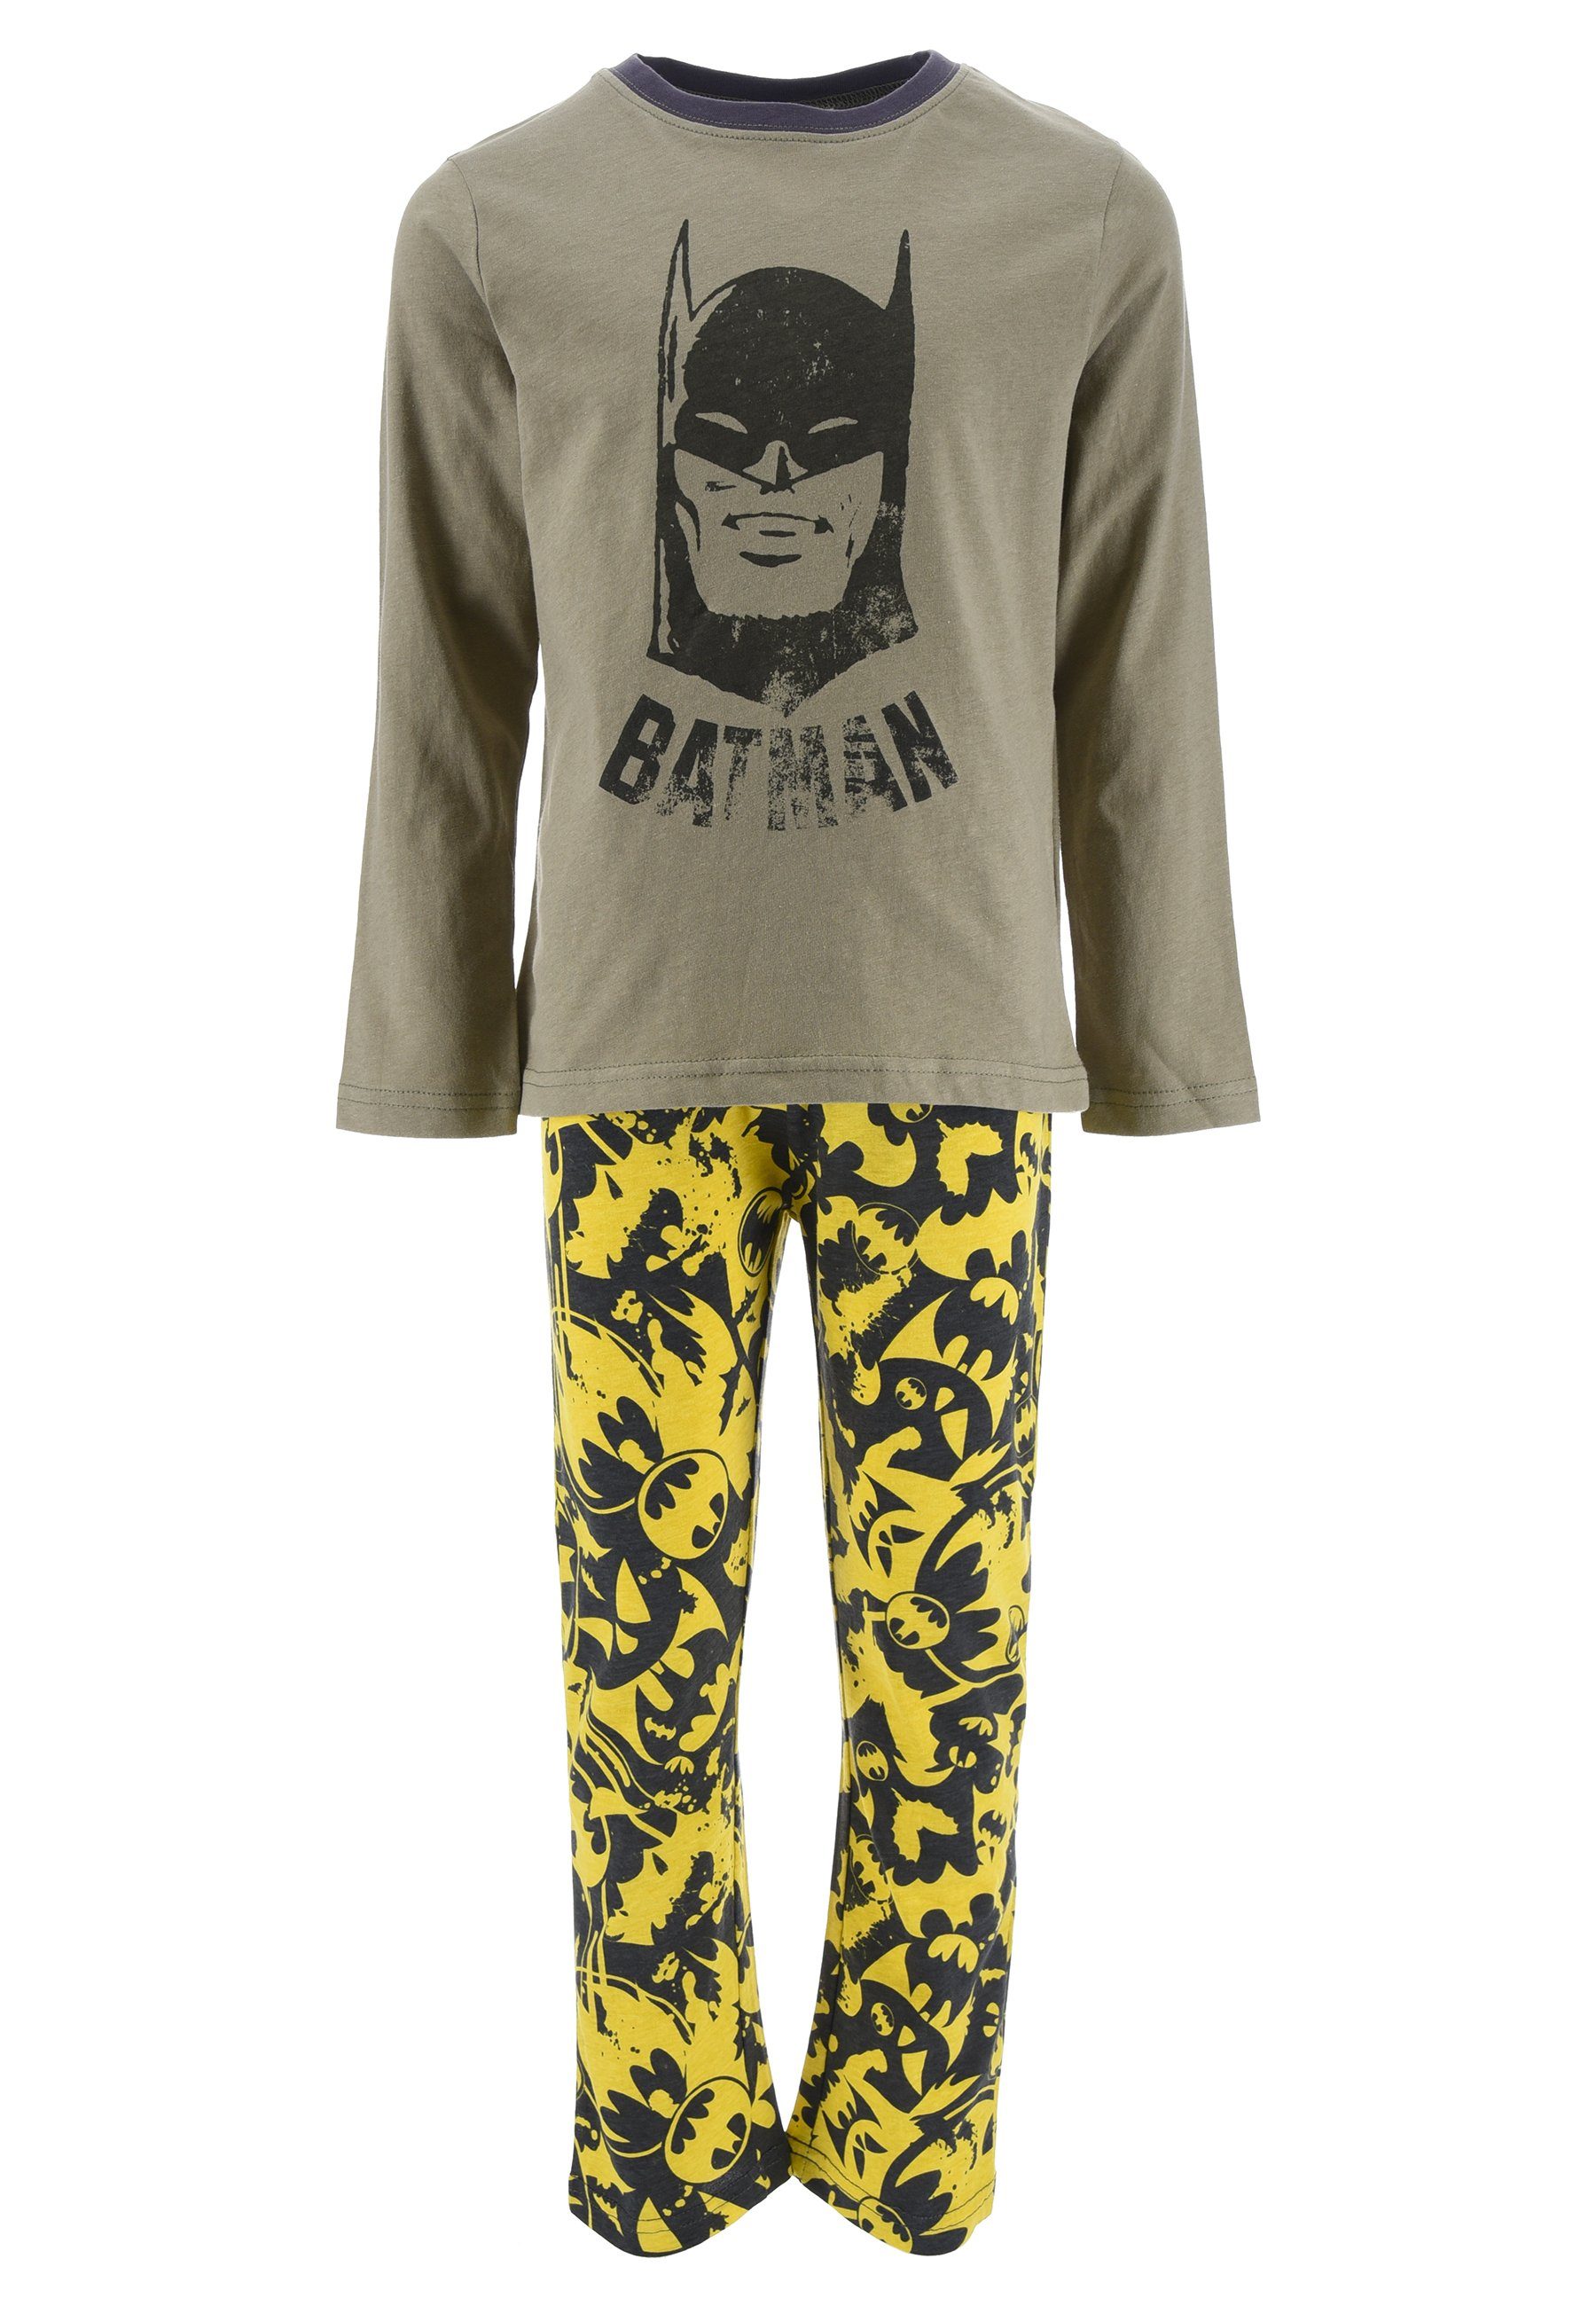 Batman Schlafanzug Kinder Jungen Pyjama langarm Nachtwäsche (2 tlg) Olivgrün